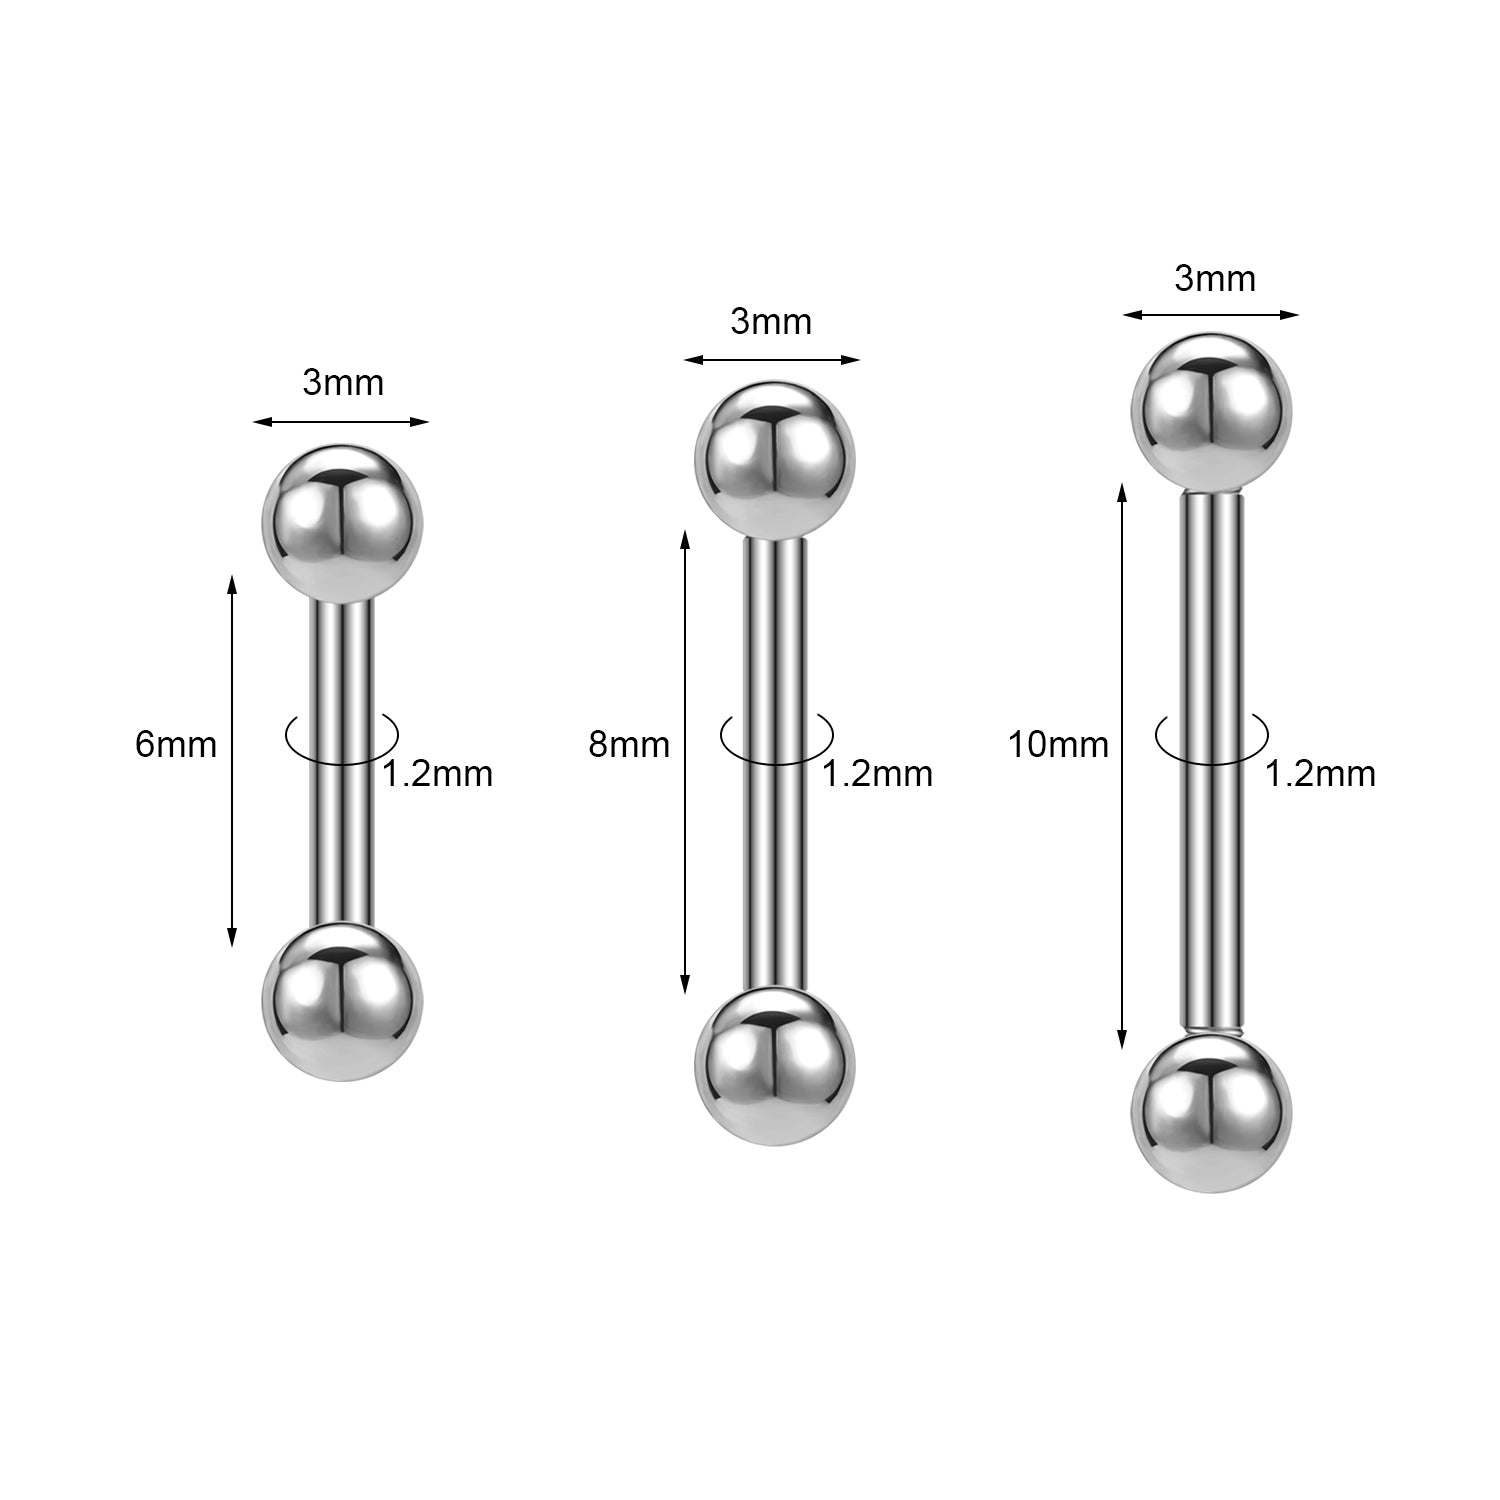 g23-titanium-ball-stud-earring-silver-ear-stud